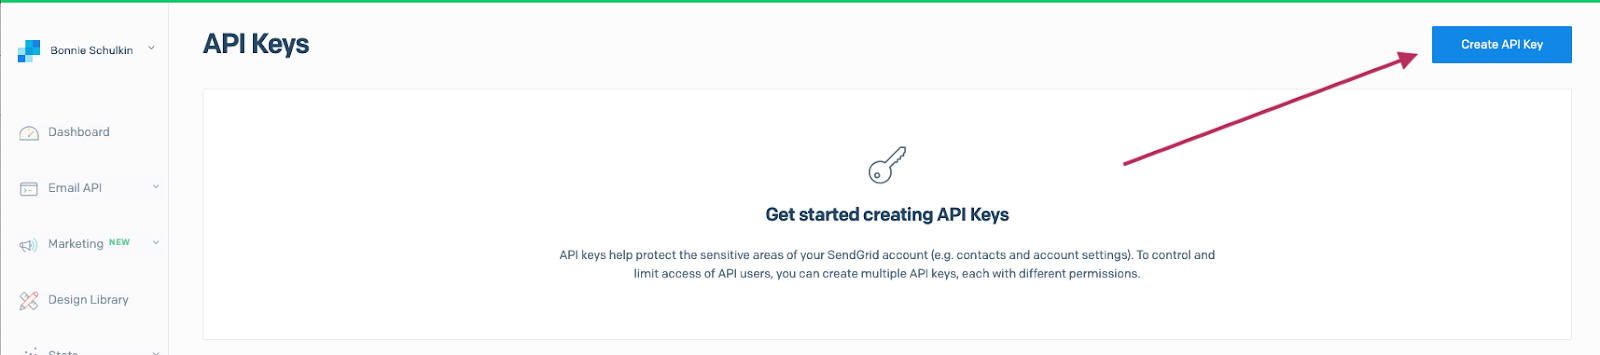 Screenshot of “Create API Key button in the upper right.